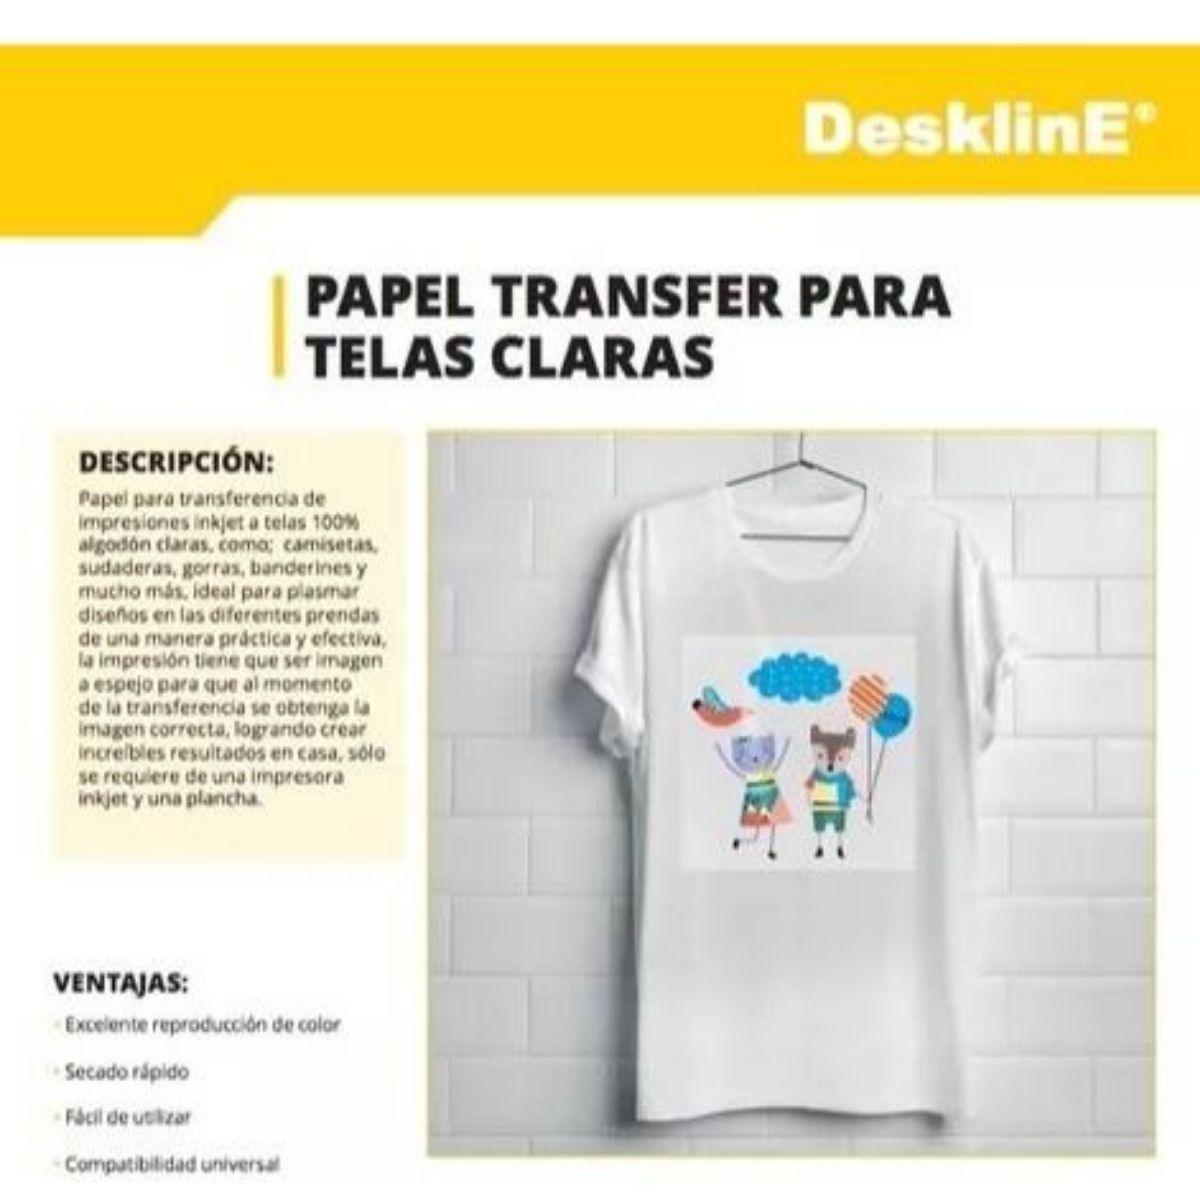 Personaliza tus camisetas con papel transfer - PAPELERIA COMPLUTENSE